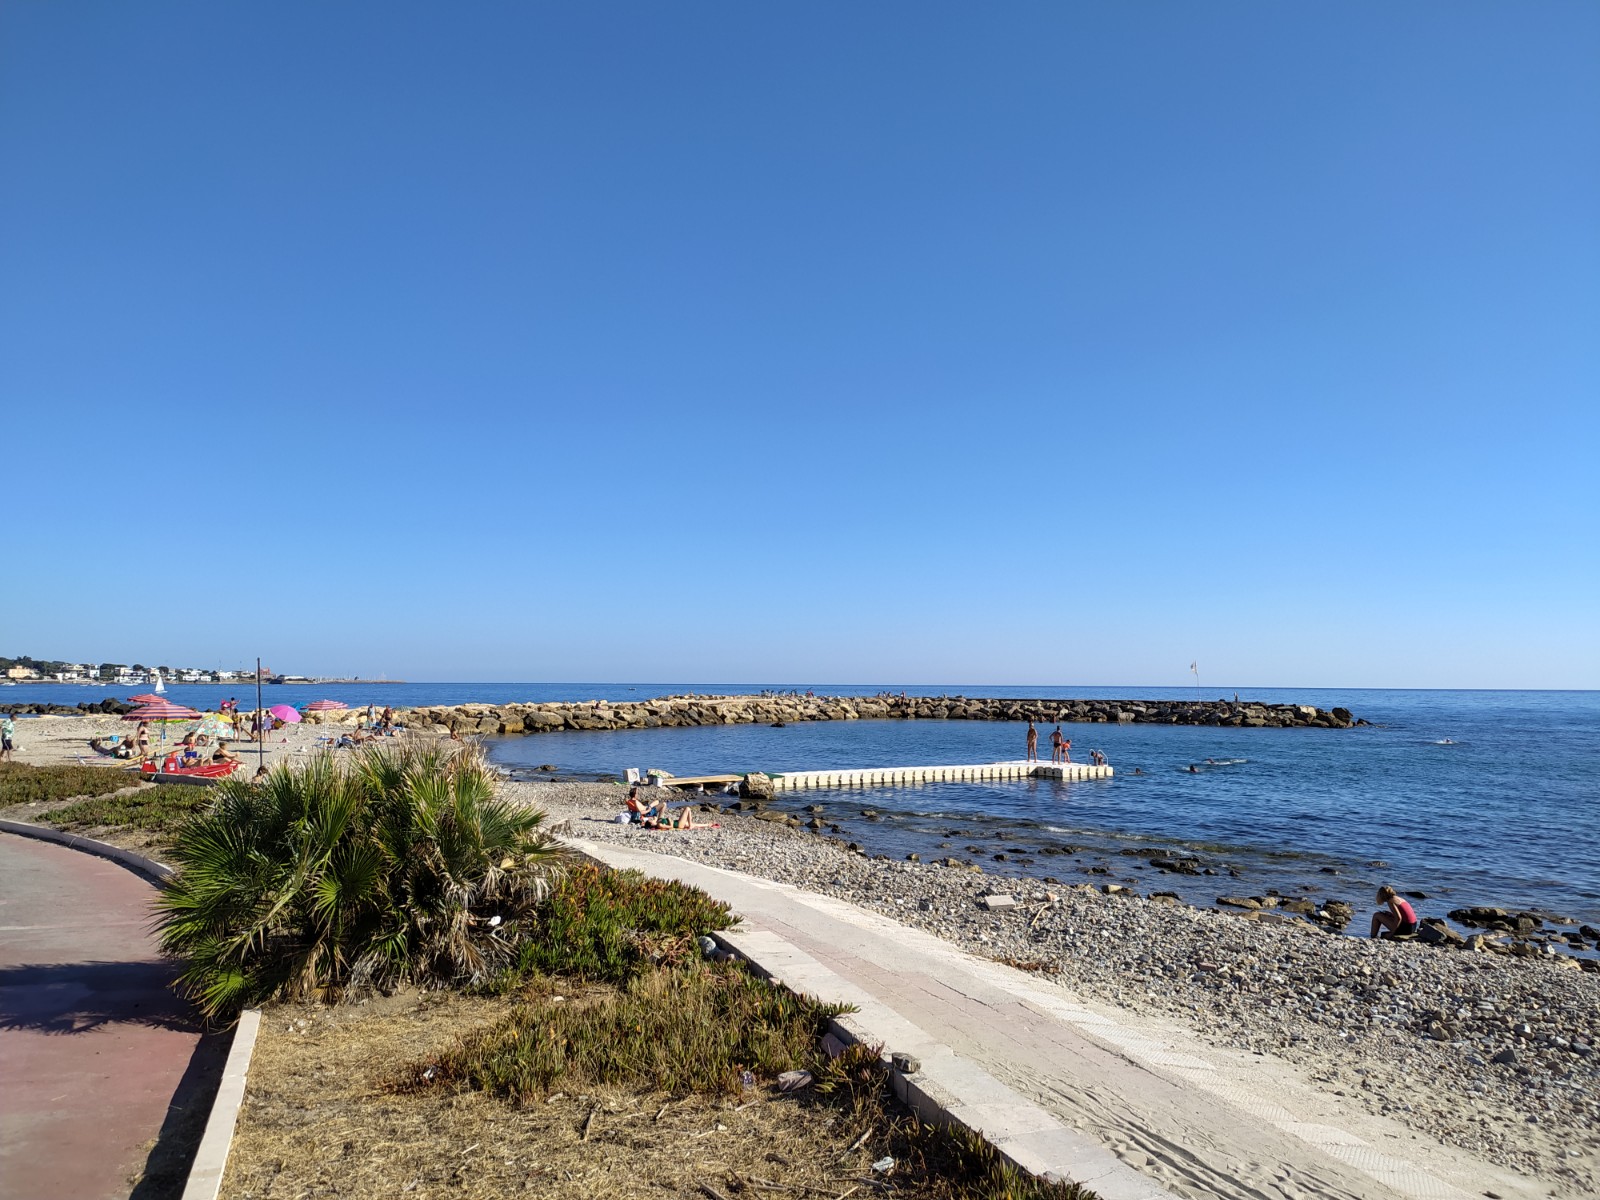 Photo of Spiaggia il pirgo #alt_